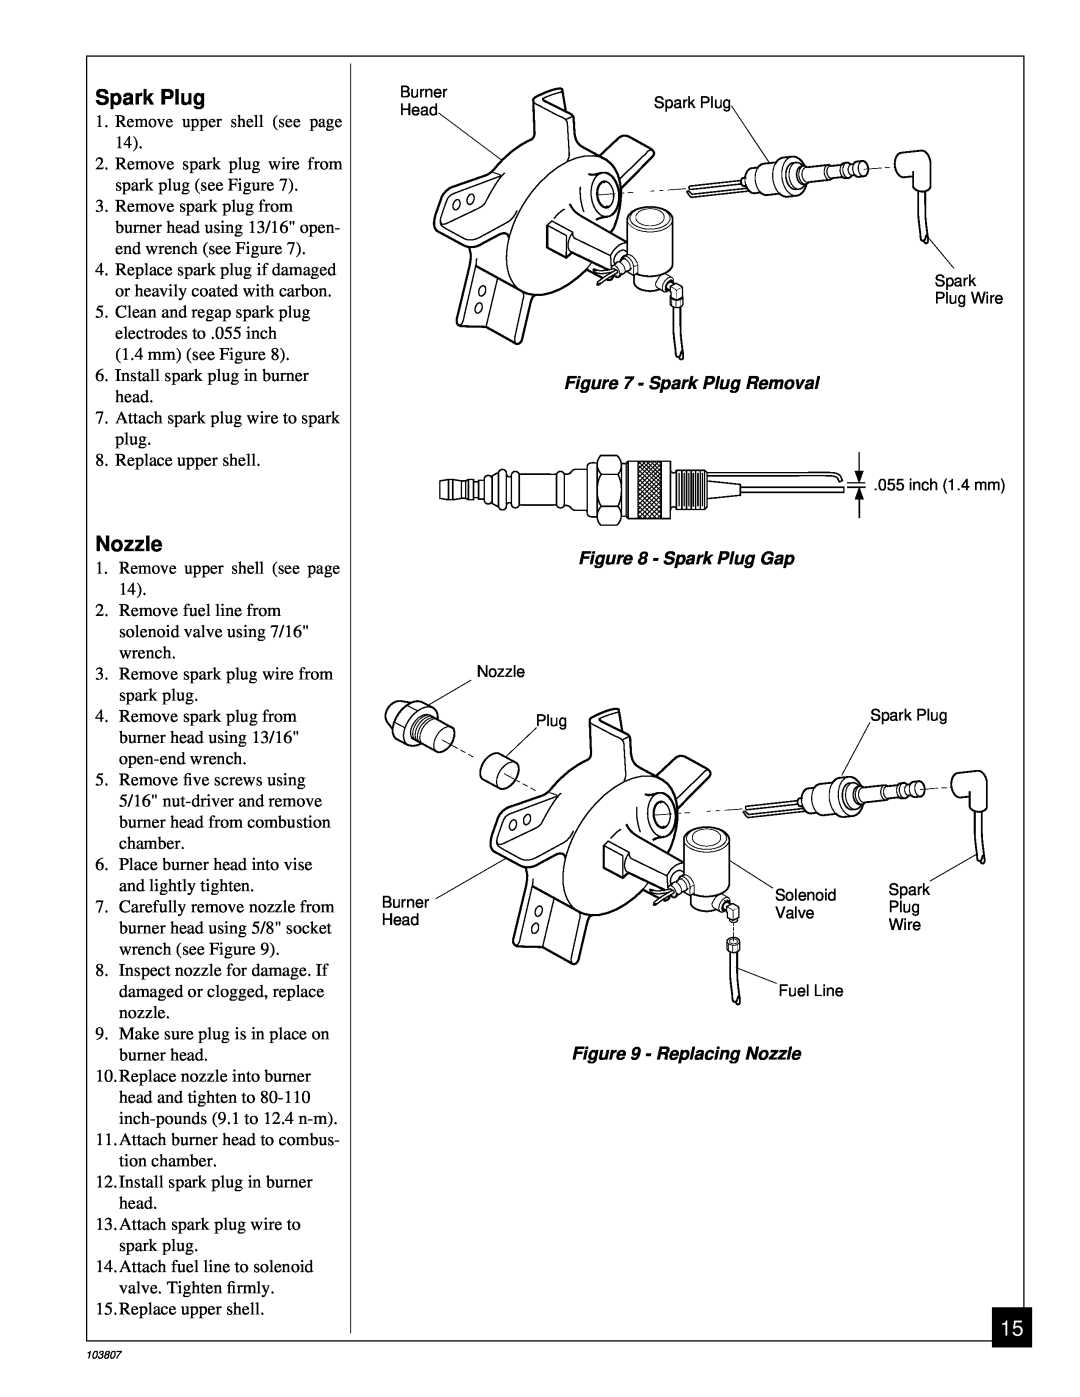 Desa B350CEA owner manual Spark Plug Removal, Spark Plug Gap, Replacing Nozzle 